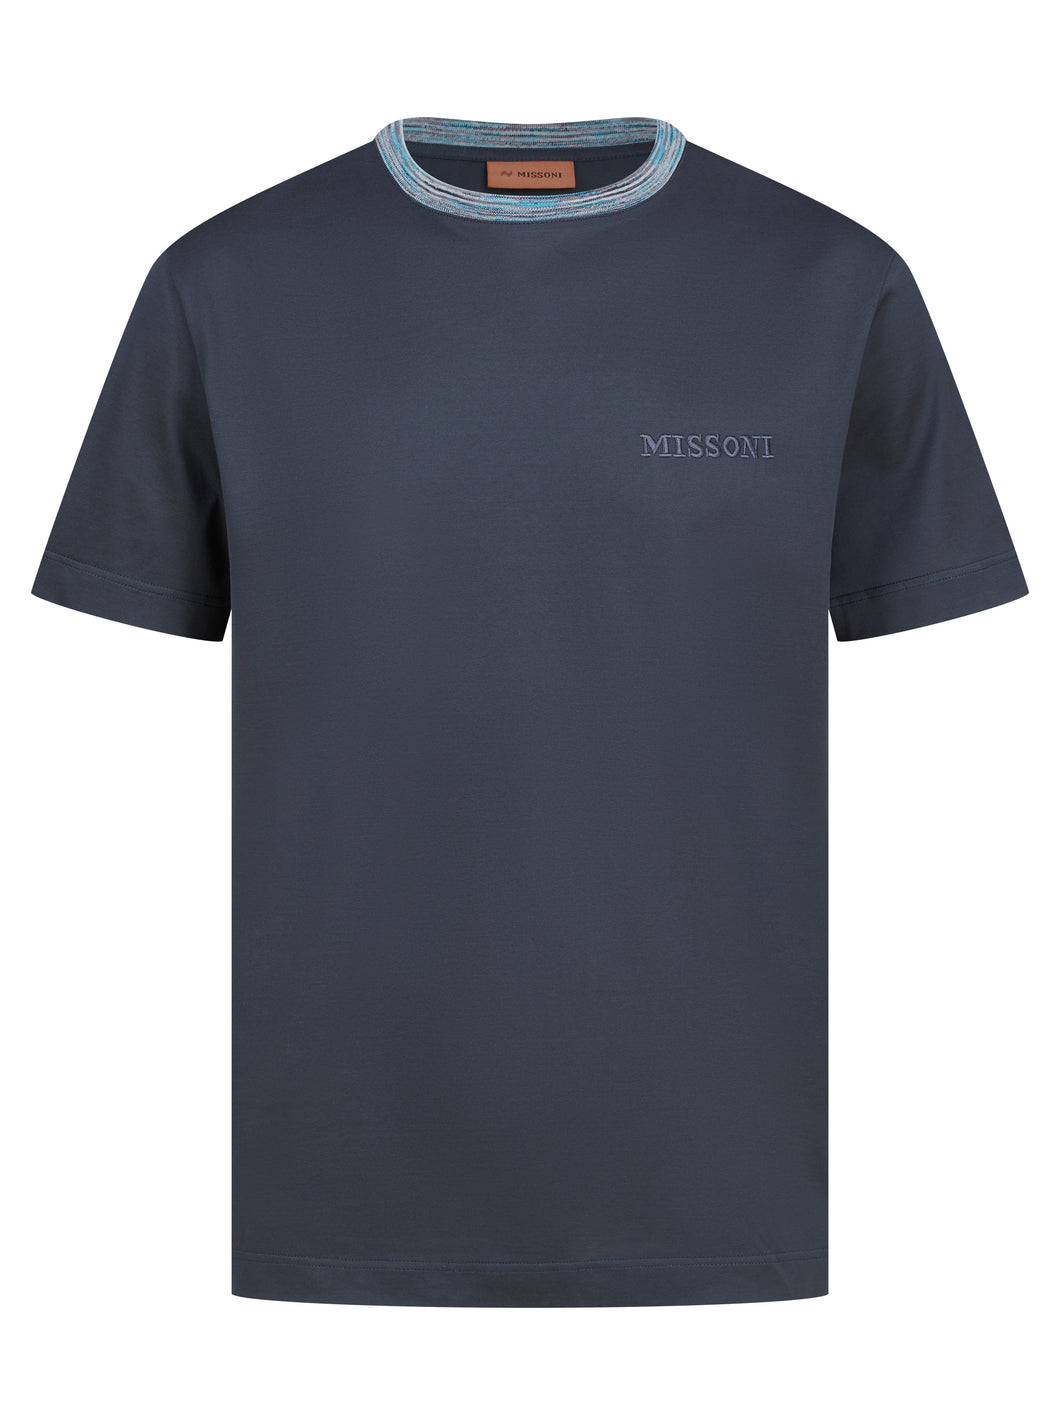 Missoni Contrast Collar T Shirt Grey